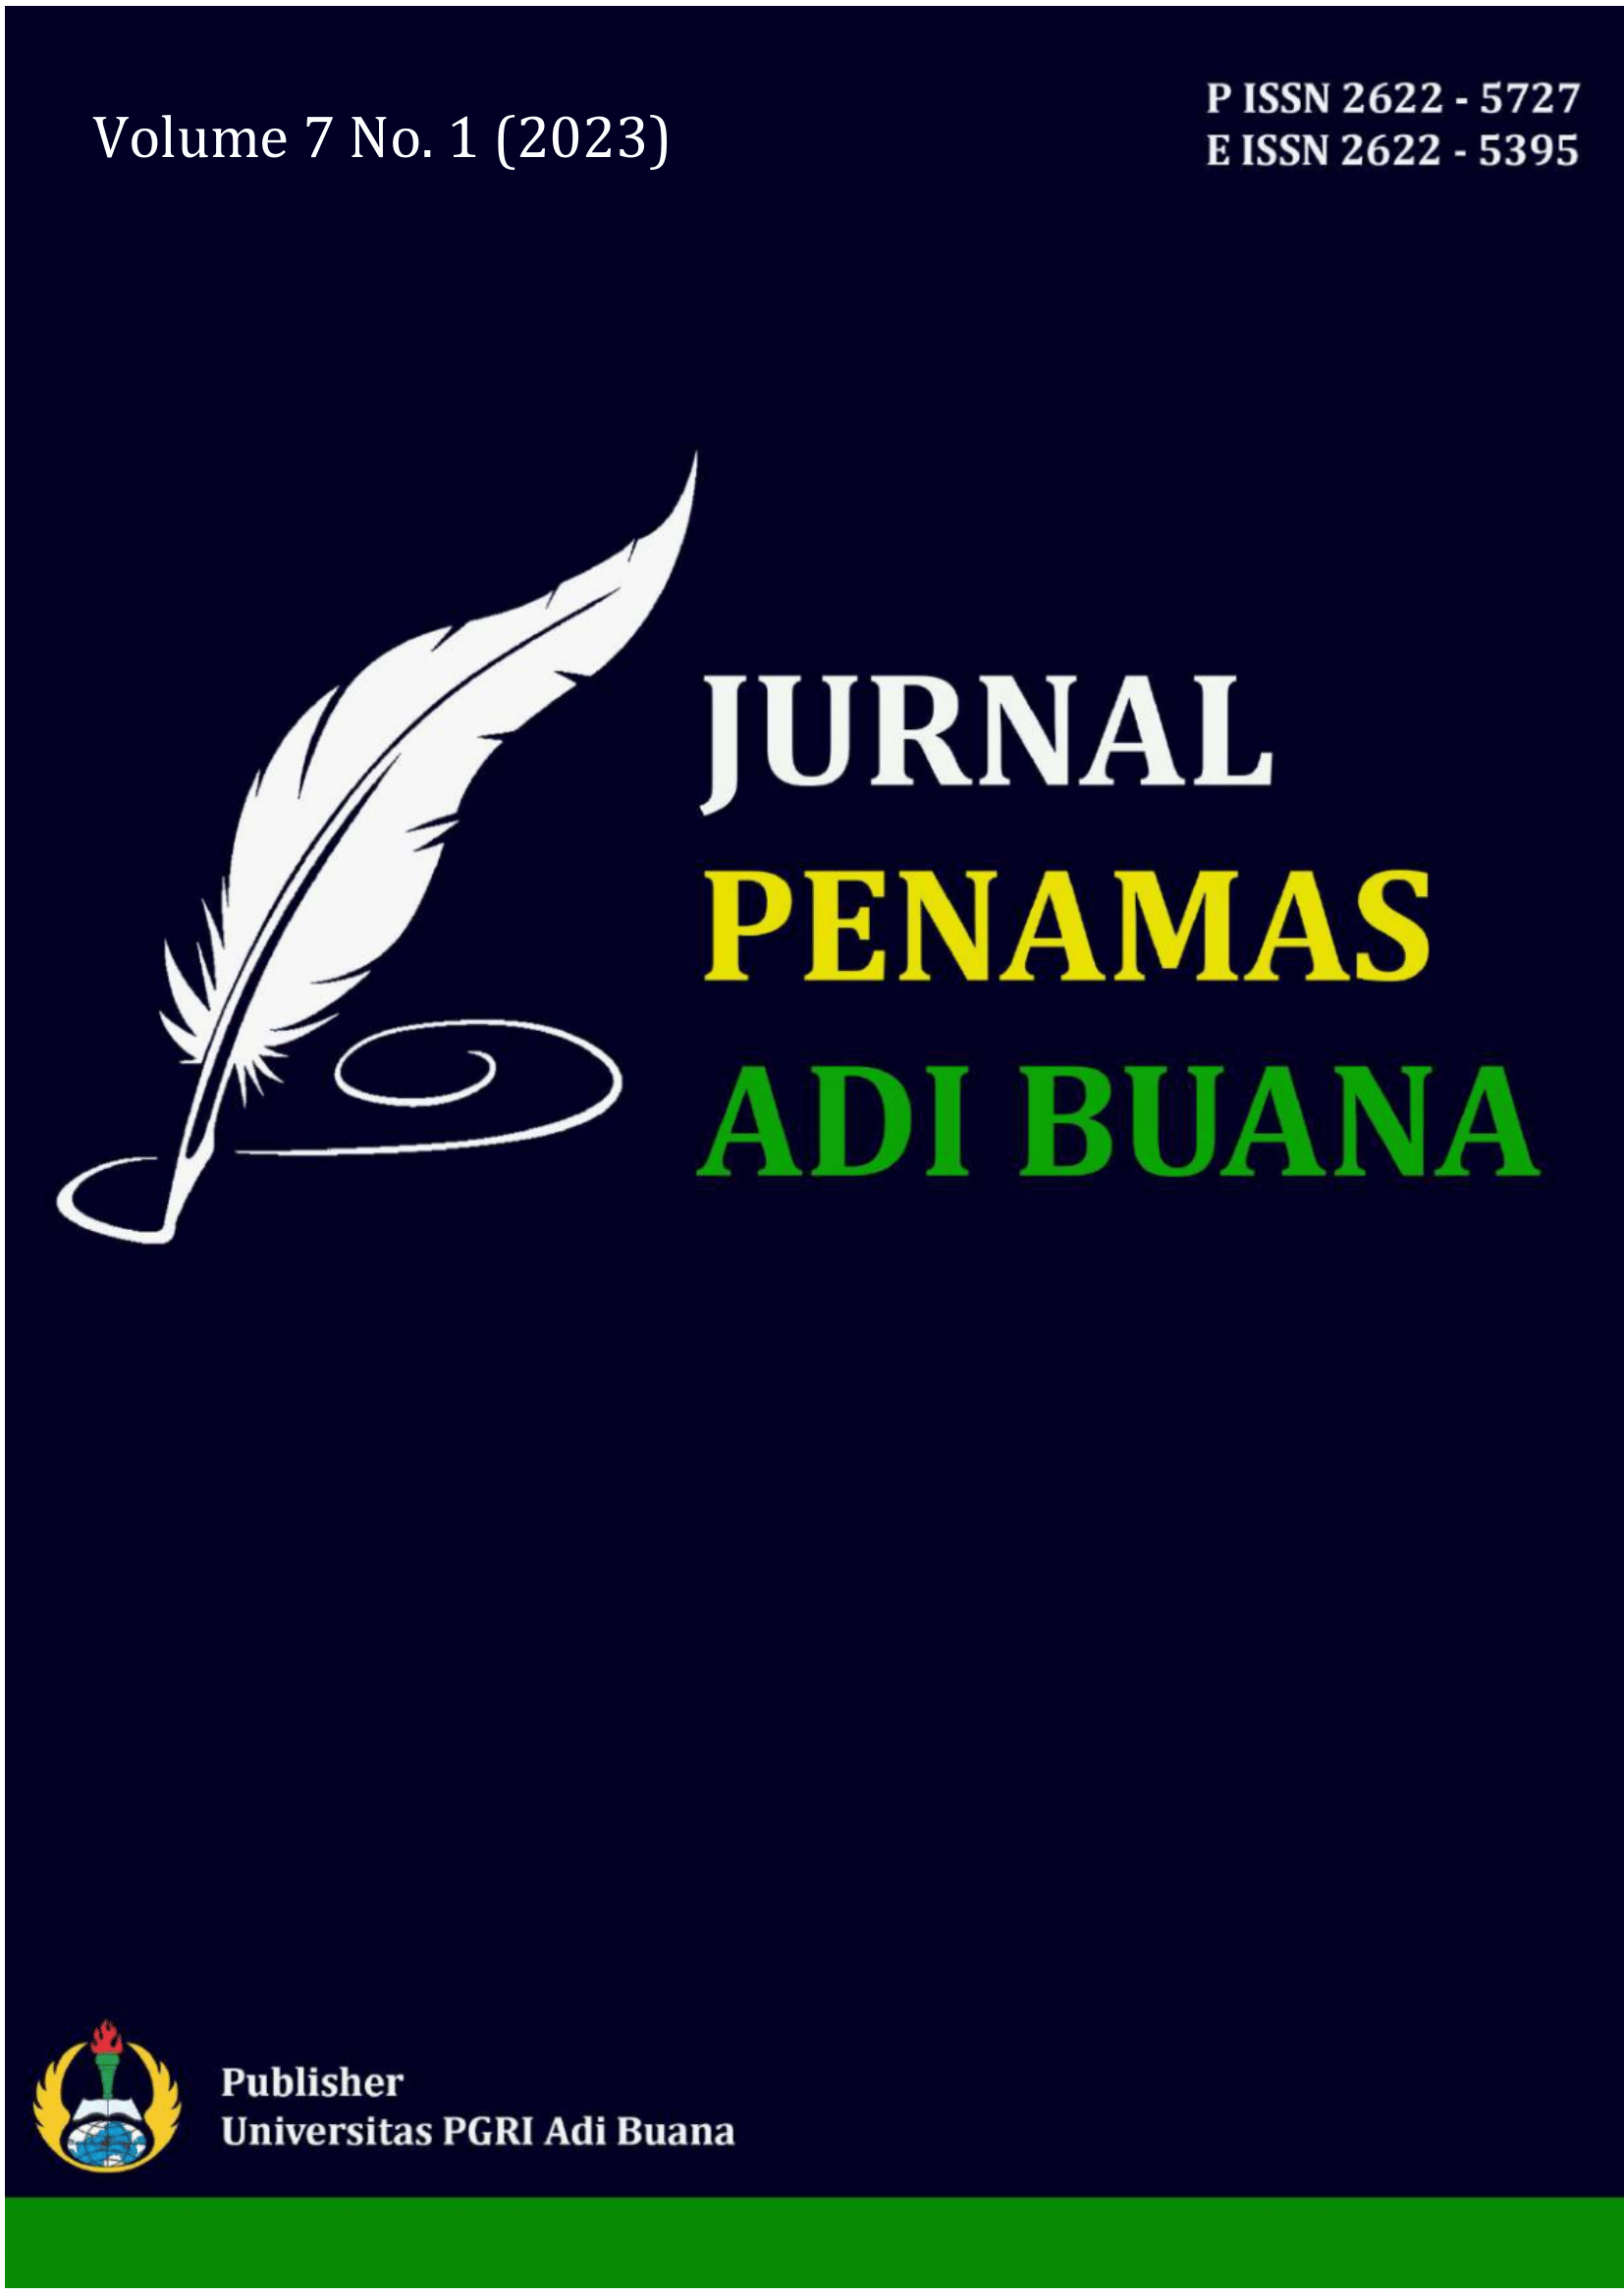 					View Vol. 7 No. 01 (2023): Jurnal Penamas Adi Buana
				